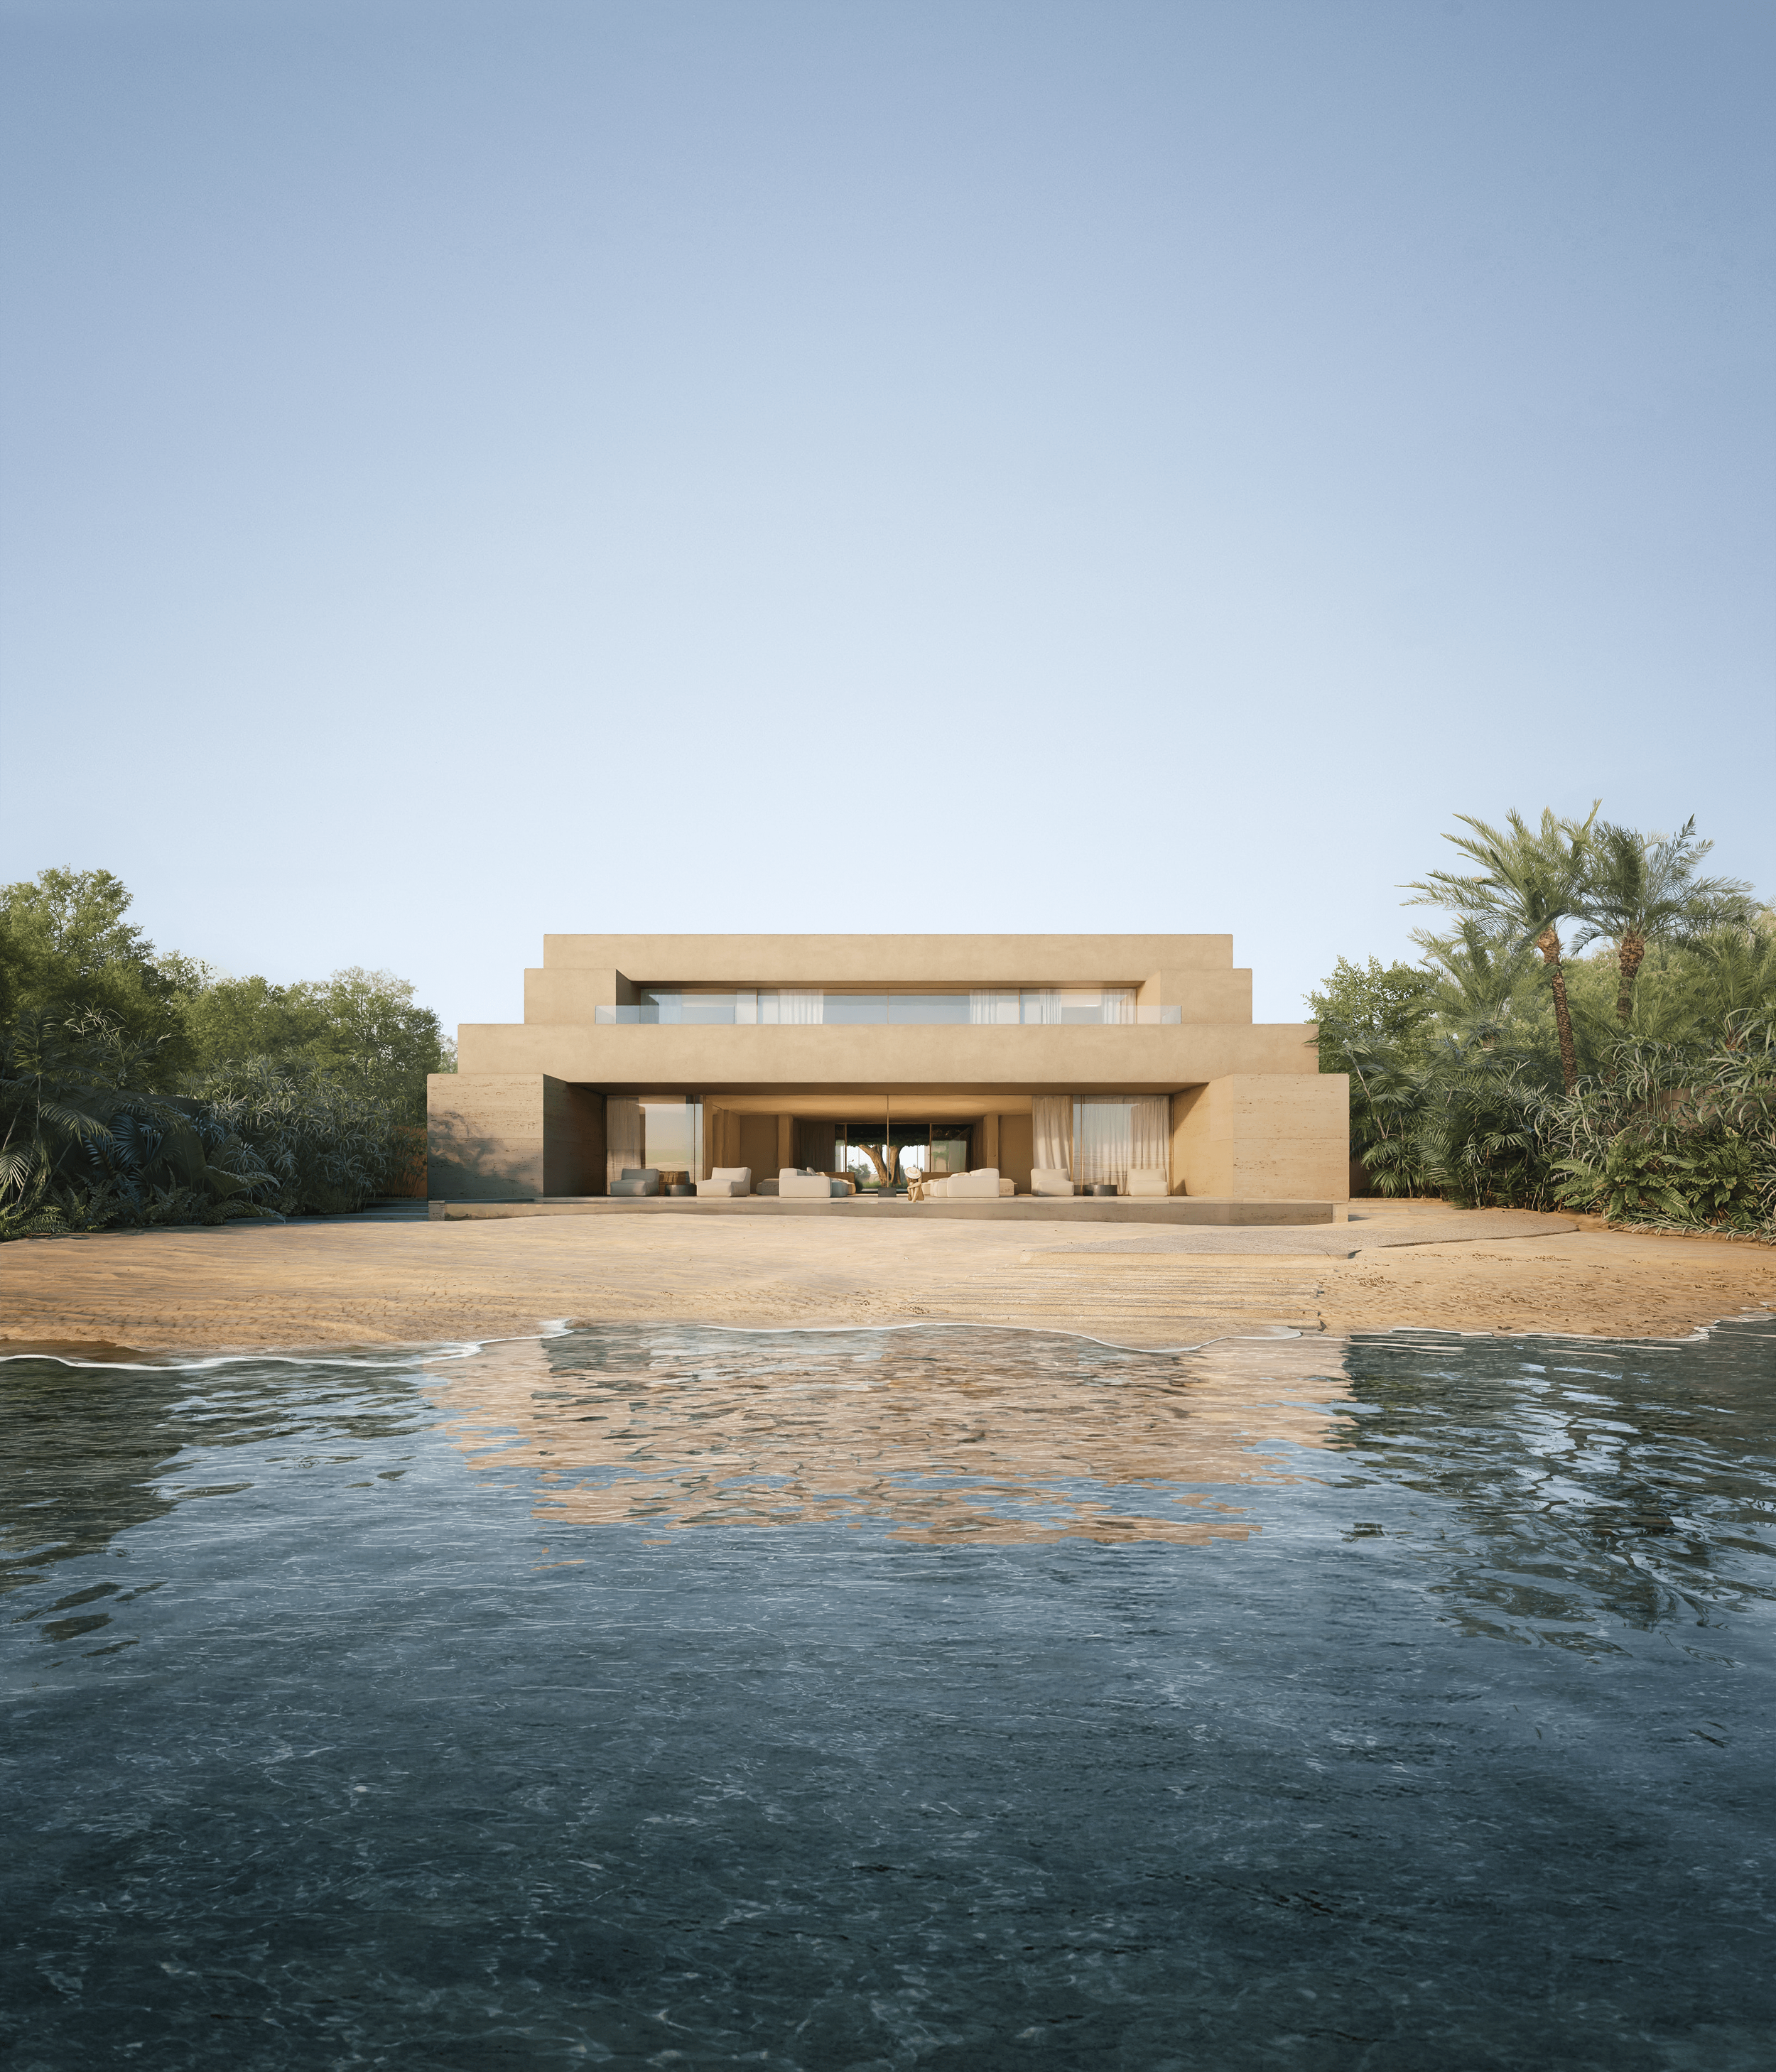 BEACH-HOUSE-ALHUMAIDHI-BALZAR-ARCHITECTS-KUWAIT-E-07-min.png